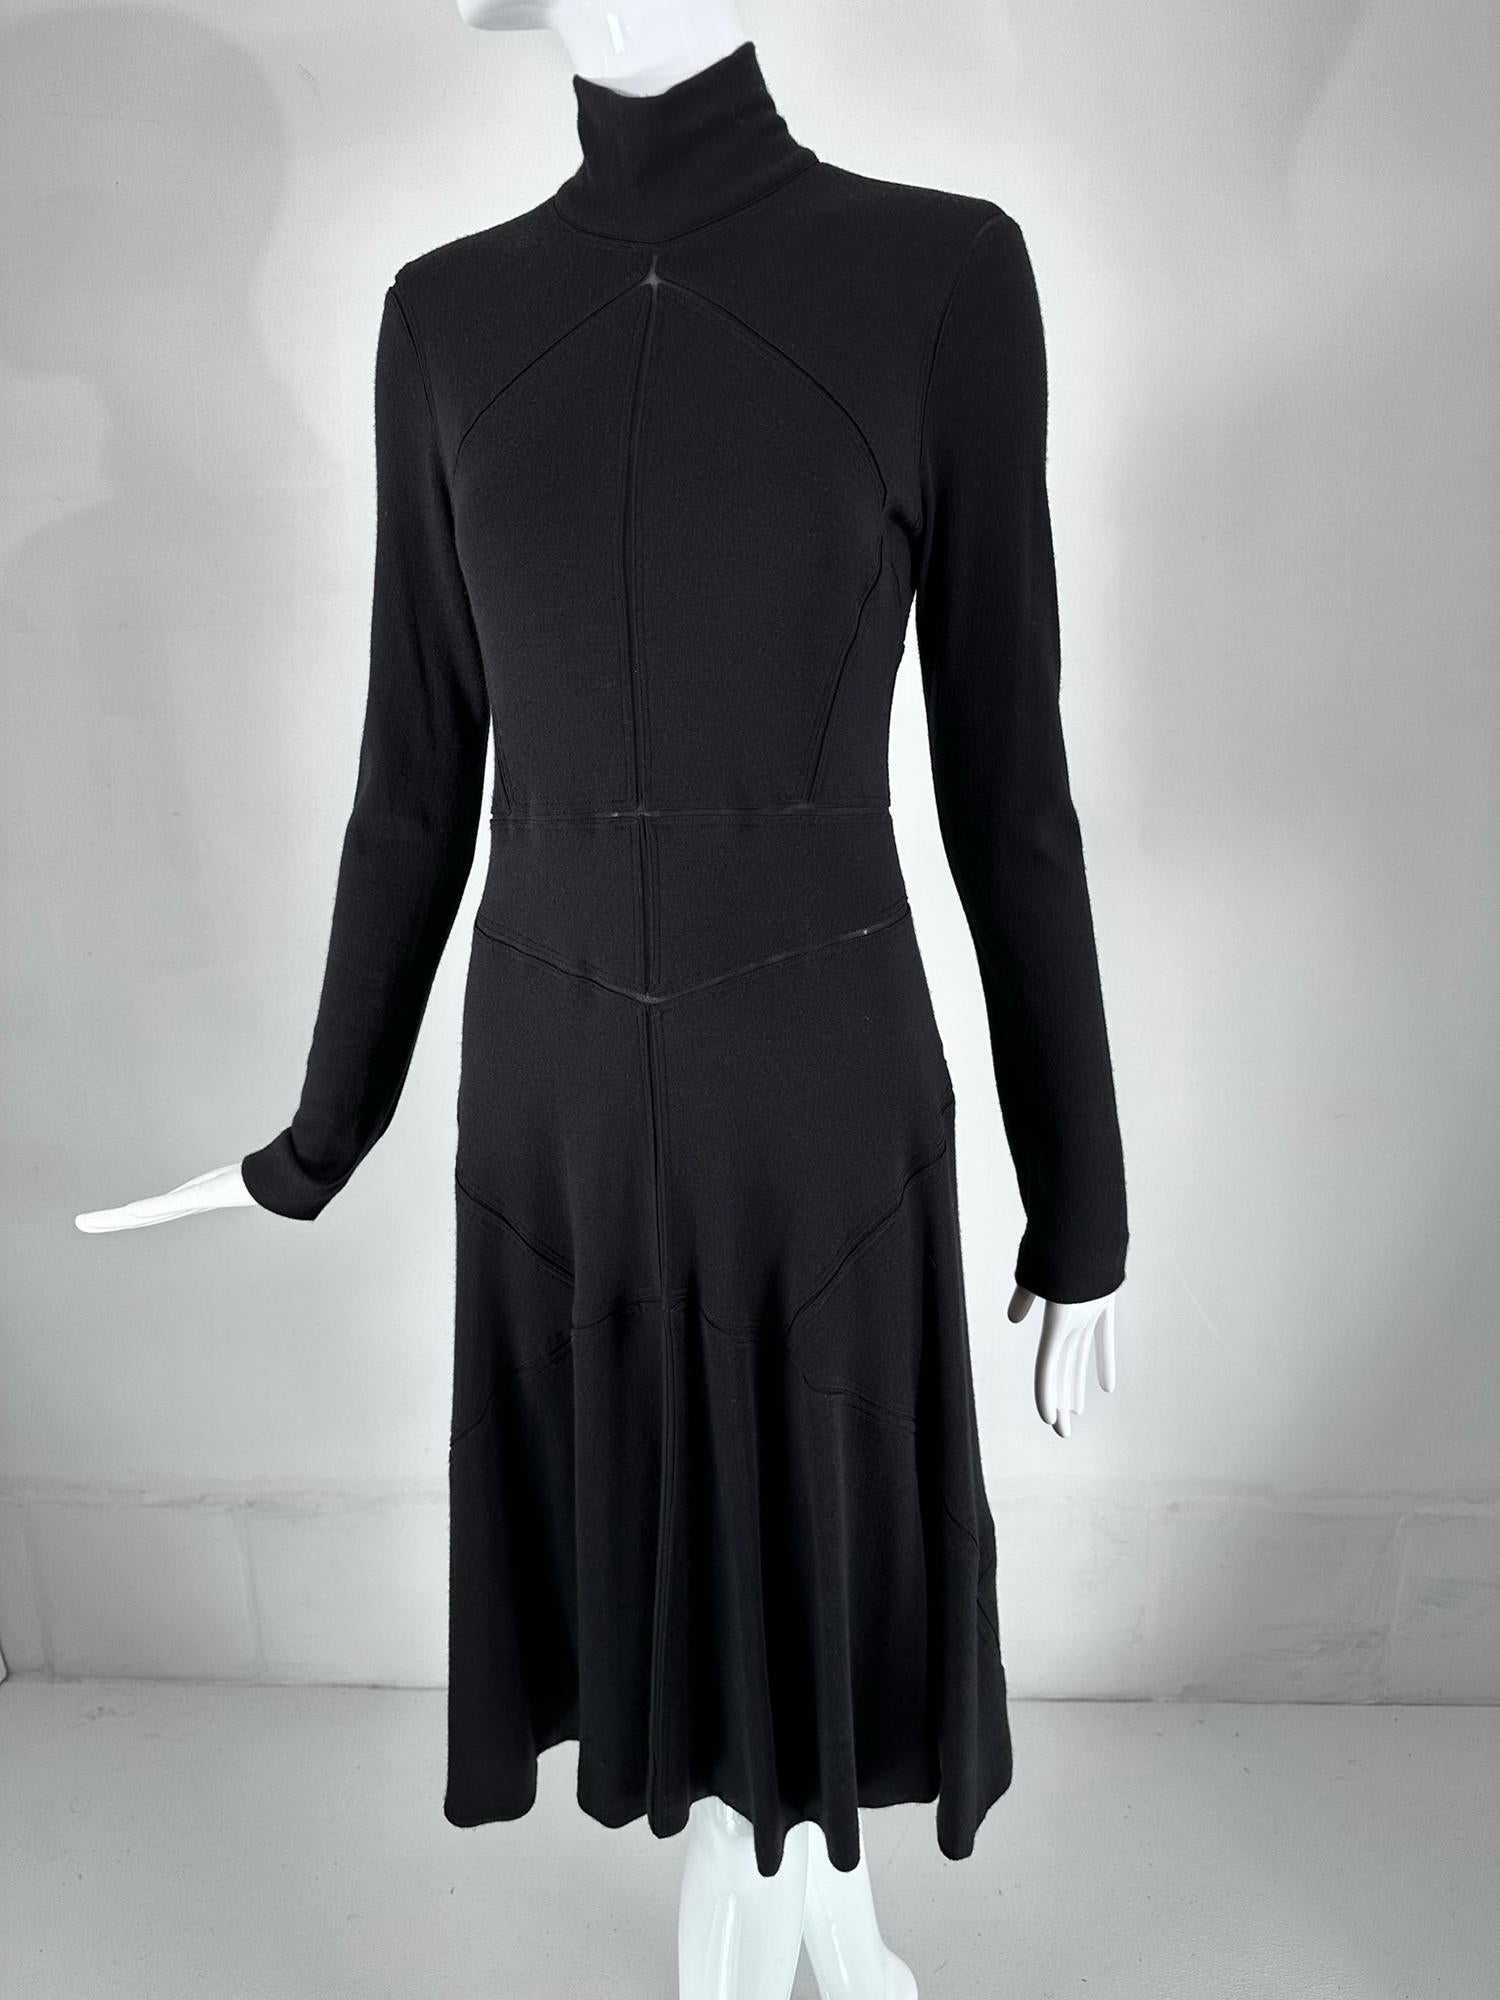 Calvin Klein 1990s Cashmere Blend Bias sheer Seam Classic Fit & Flair Dress 8 For Sale 6